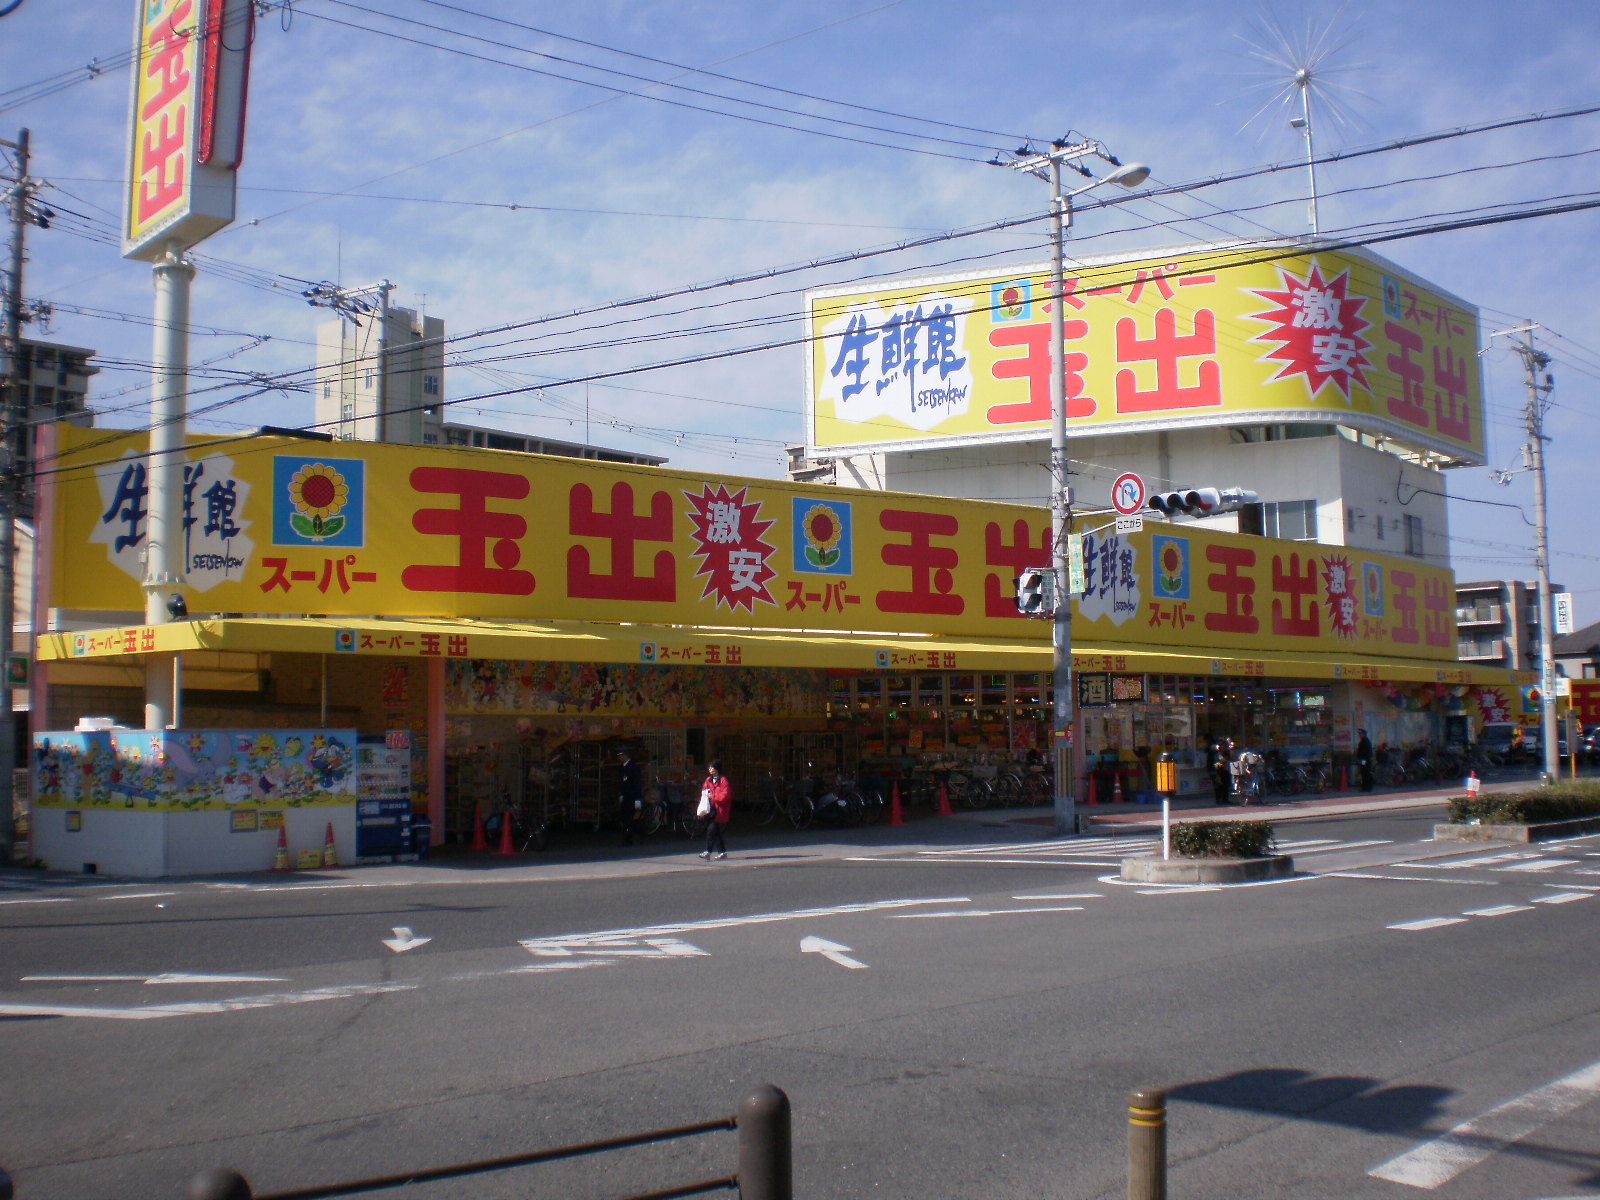 Supermarket. 272m to Super Tamade Kire store (Super)